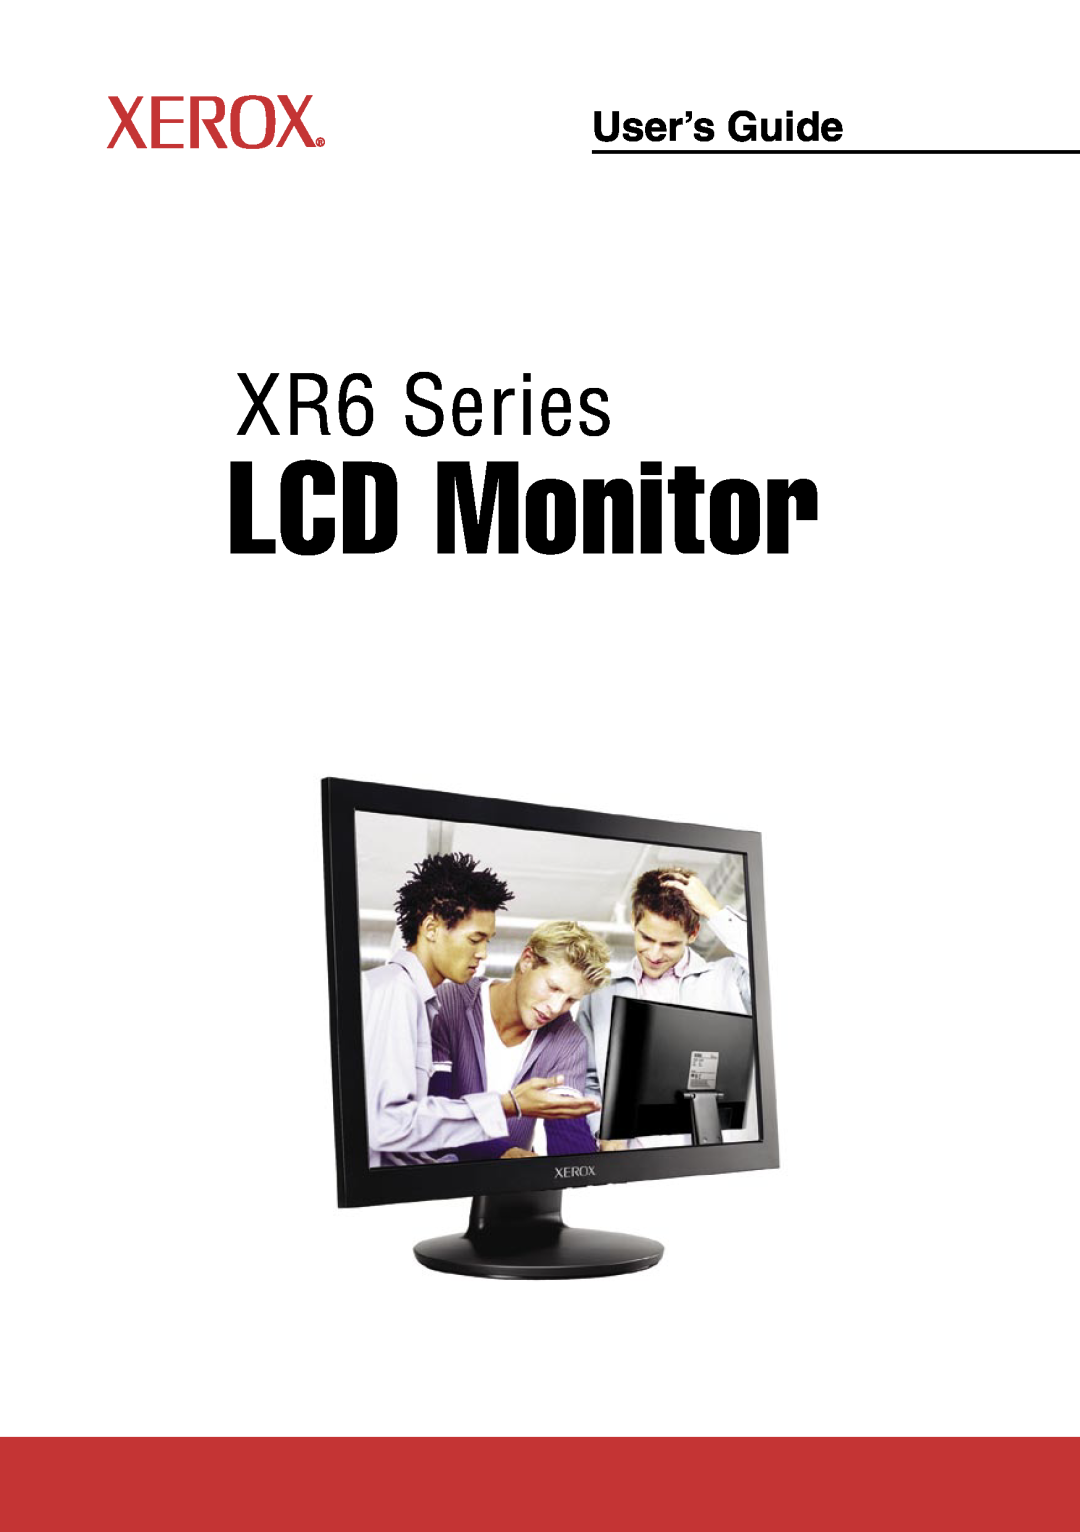 Xerox XR6 Series manual LCD Monitor, User’s Guide 